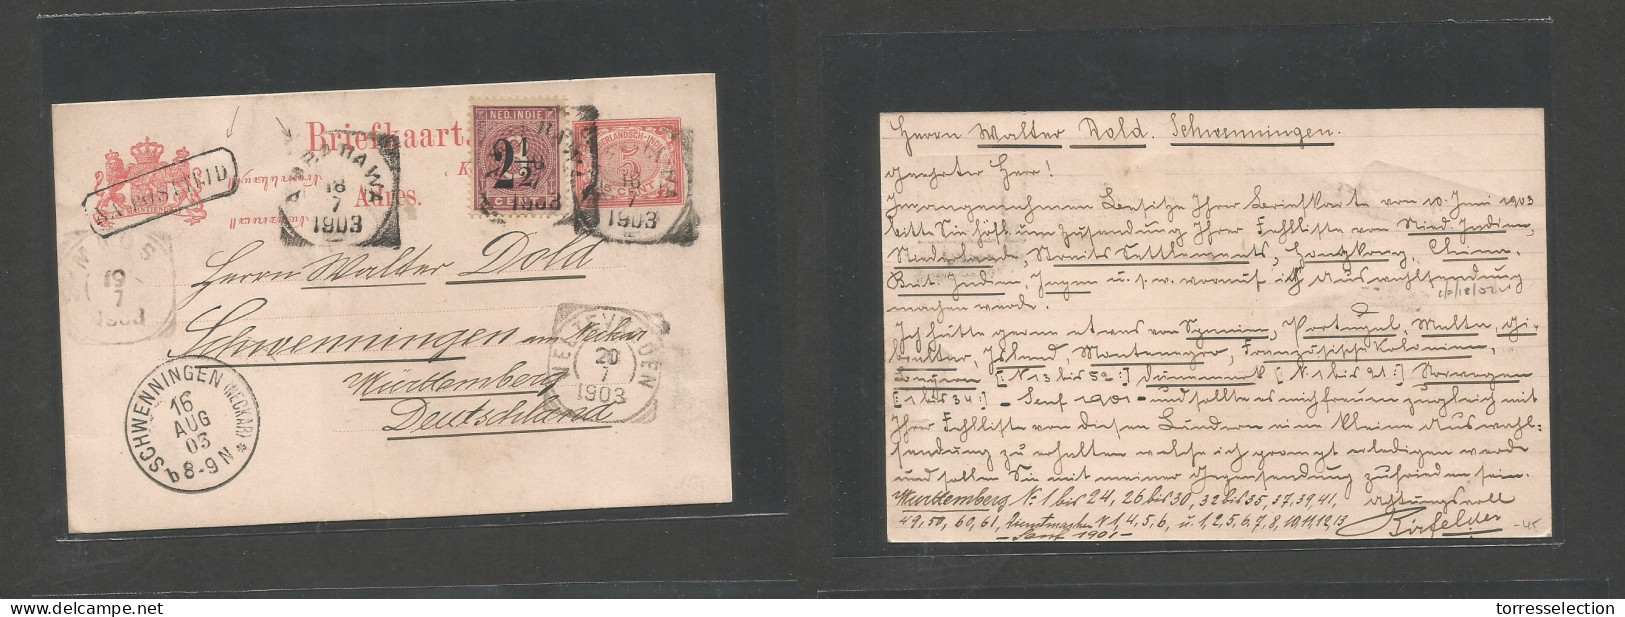 DUTCH INDIES. 1903 (18 July) Ambanawa - Germany, Wurttemberg, Schwenningen (16 Aug) 5c Red Stat Card + Adtl 2 1/2 Ovptd, - Indonesia